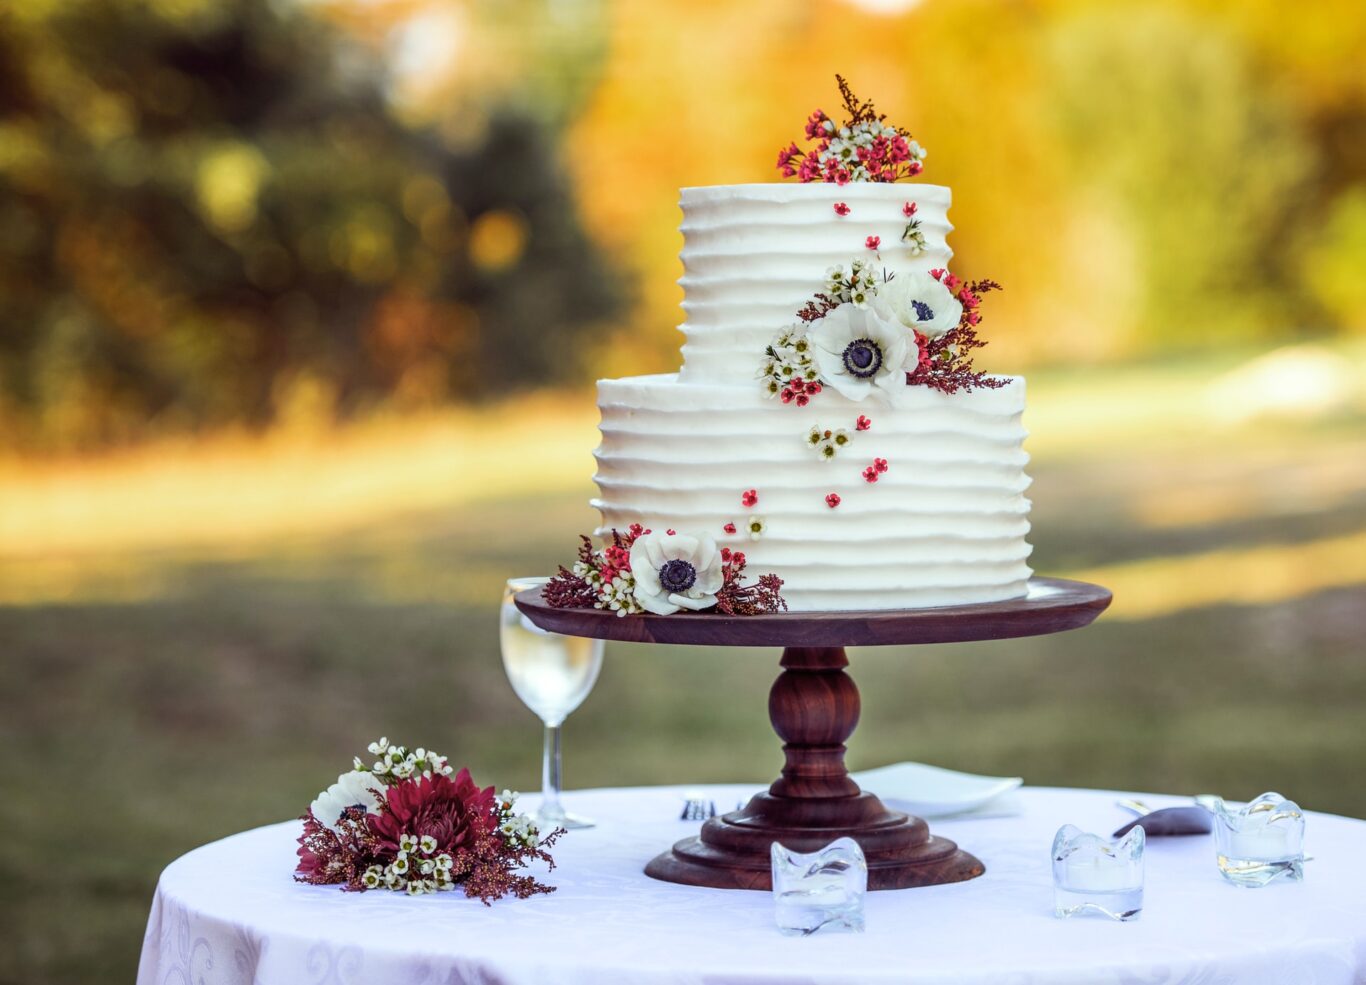 tourta gamou wedding cake white and red floral cake